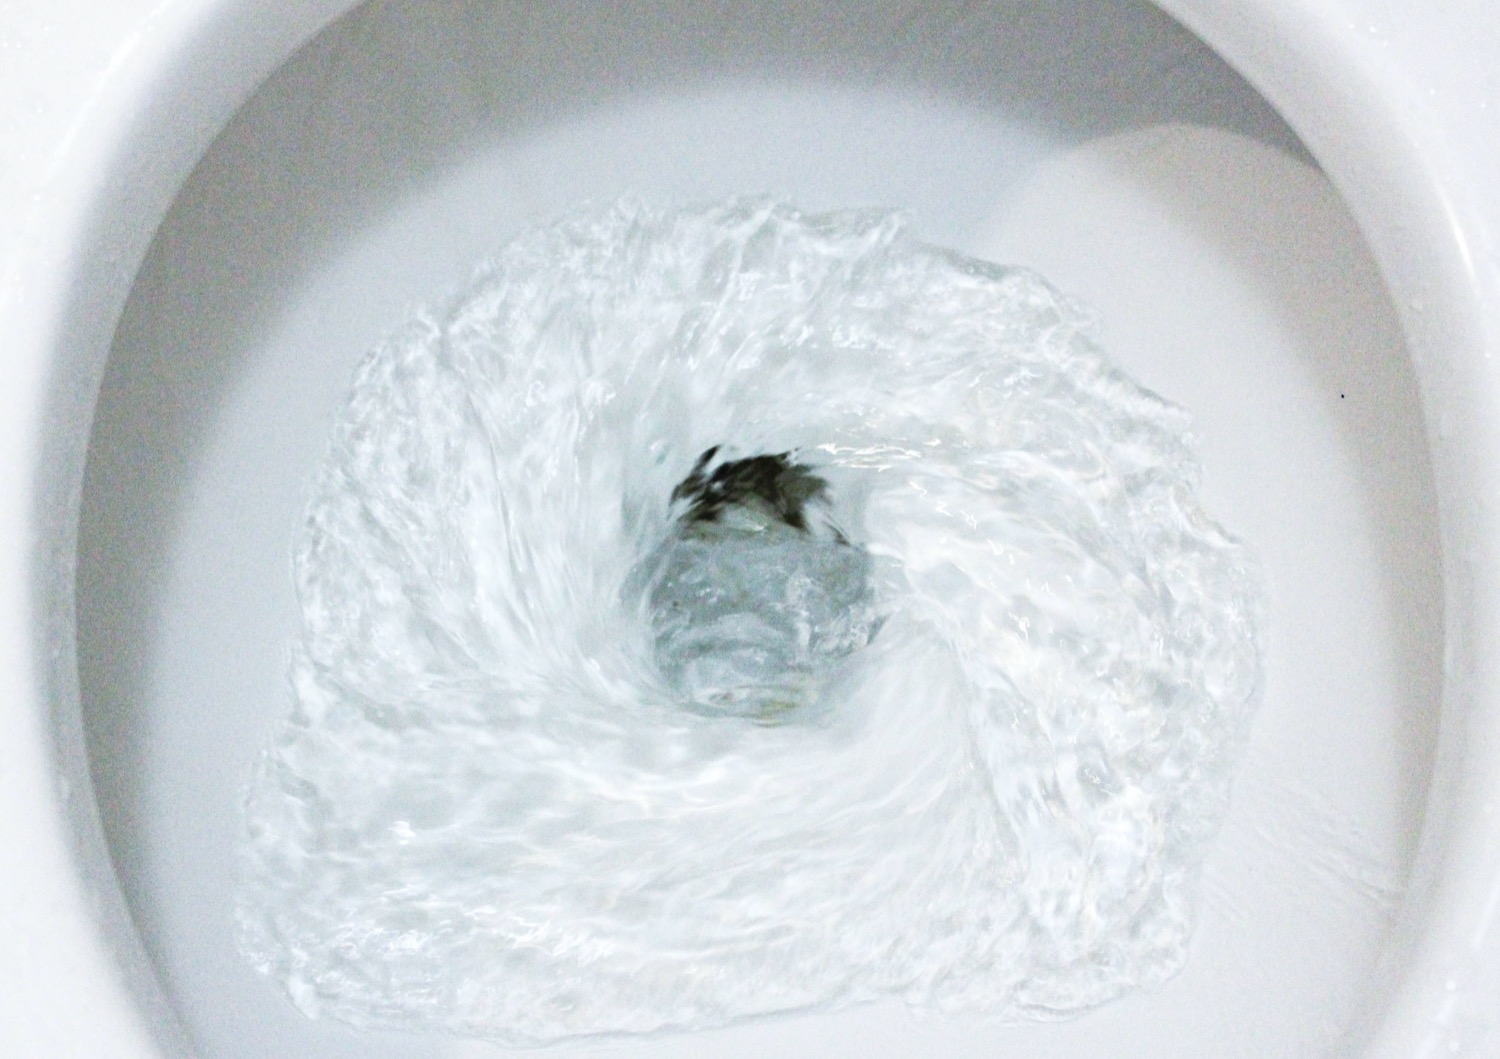 a toilet flushing